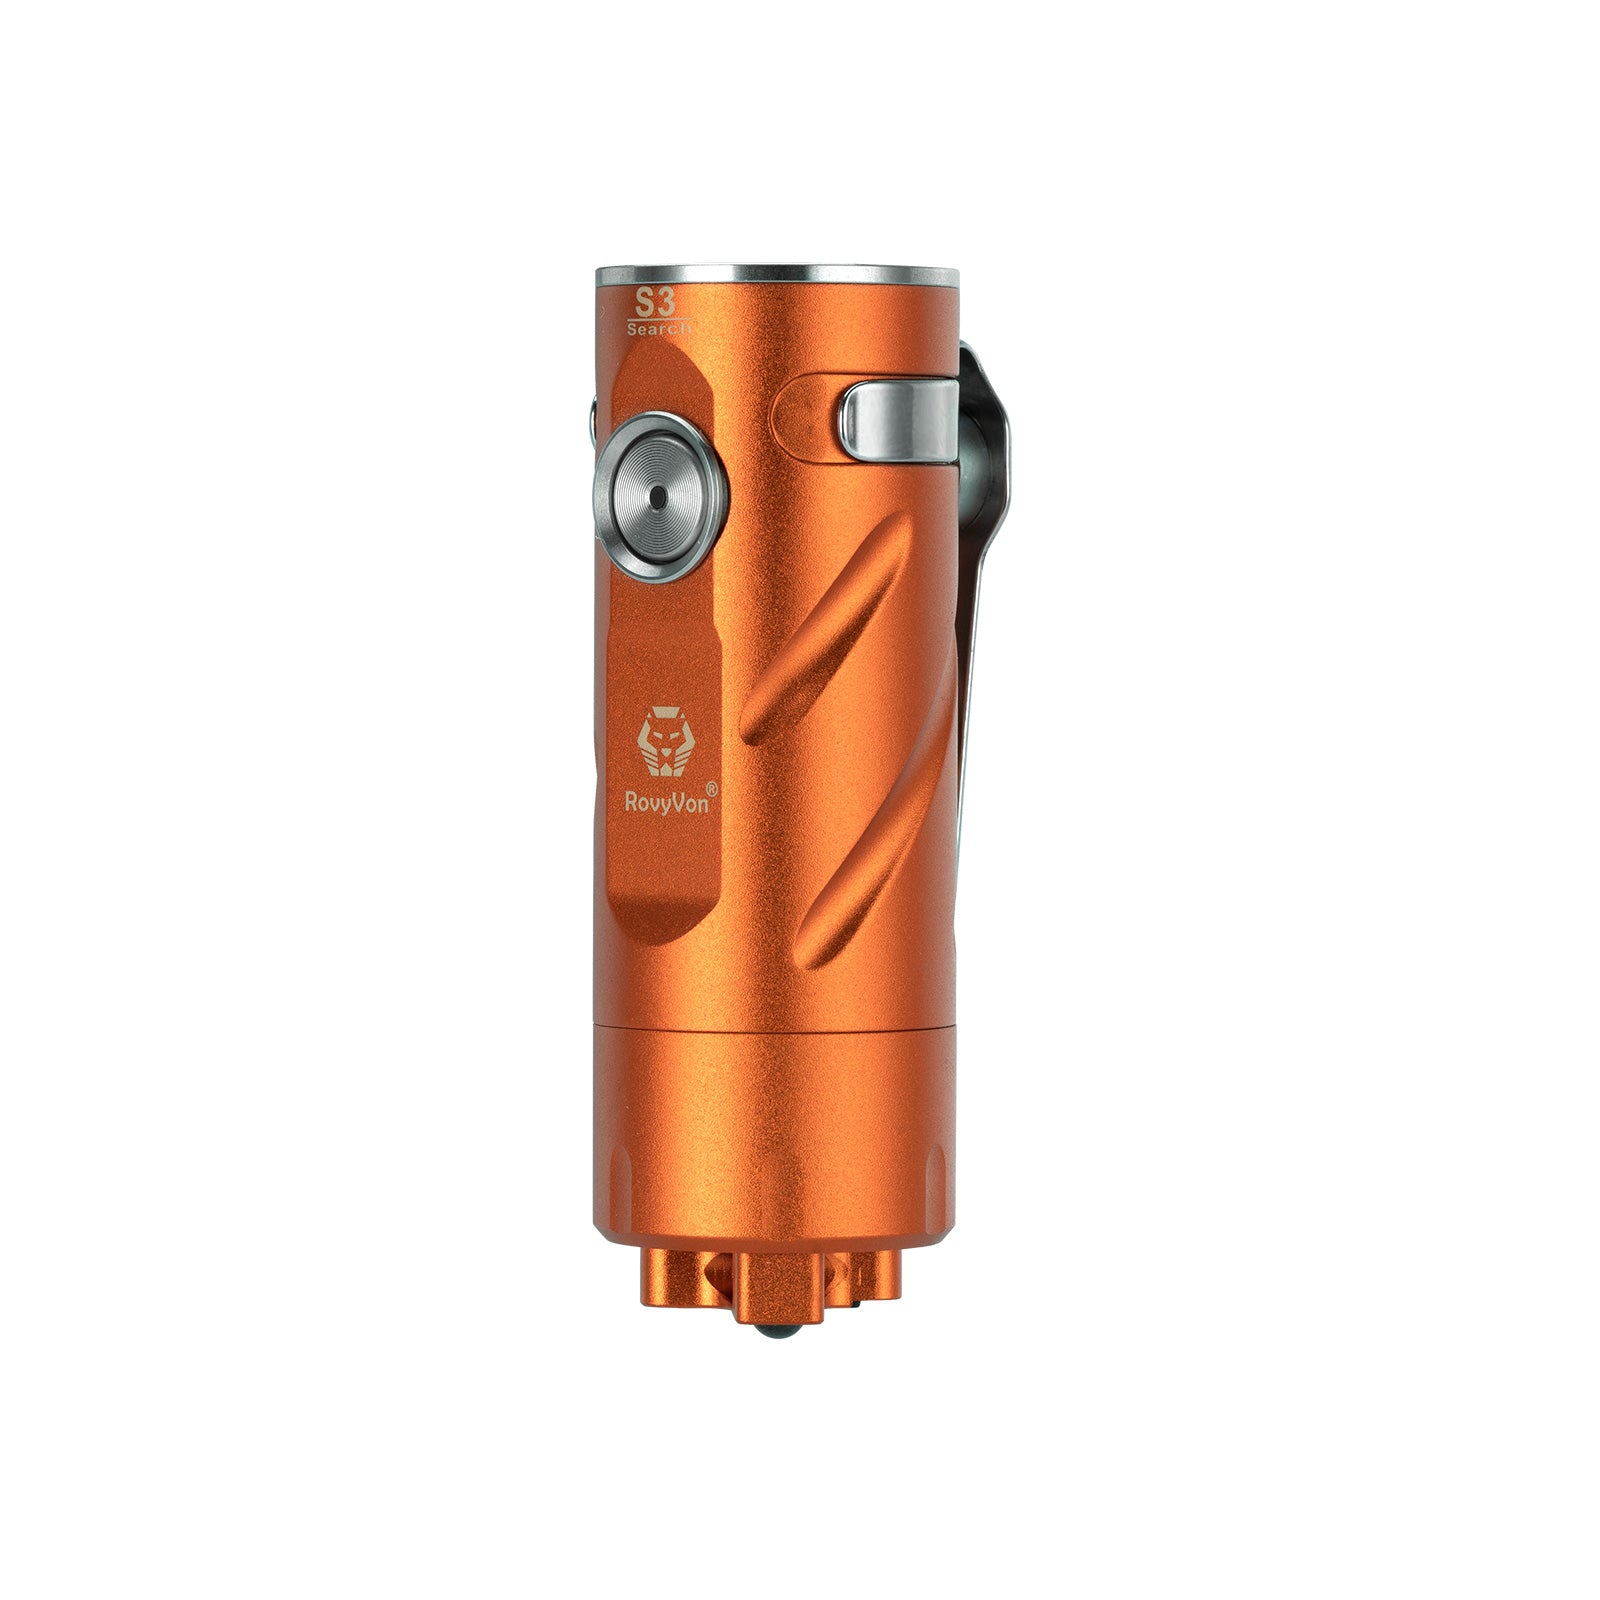 Search S3, 1800 lumens EDC Flashlight - The Orange